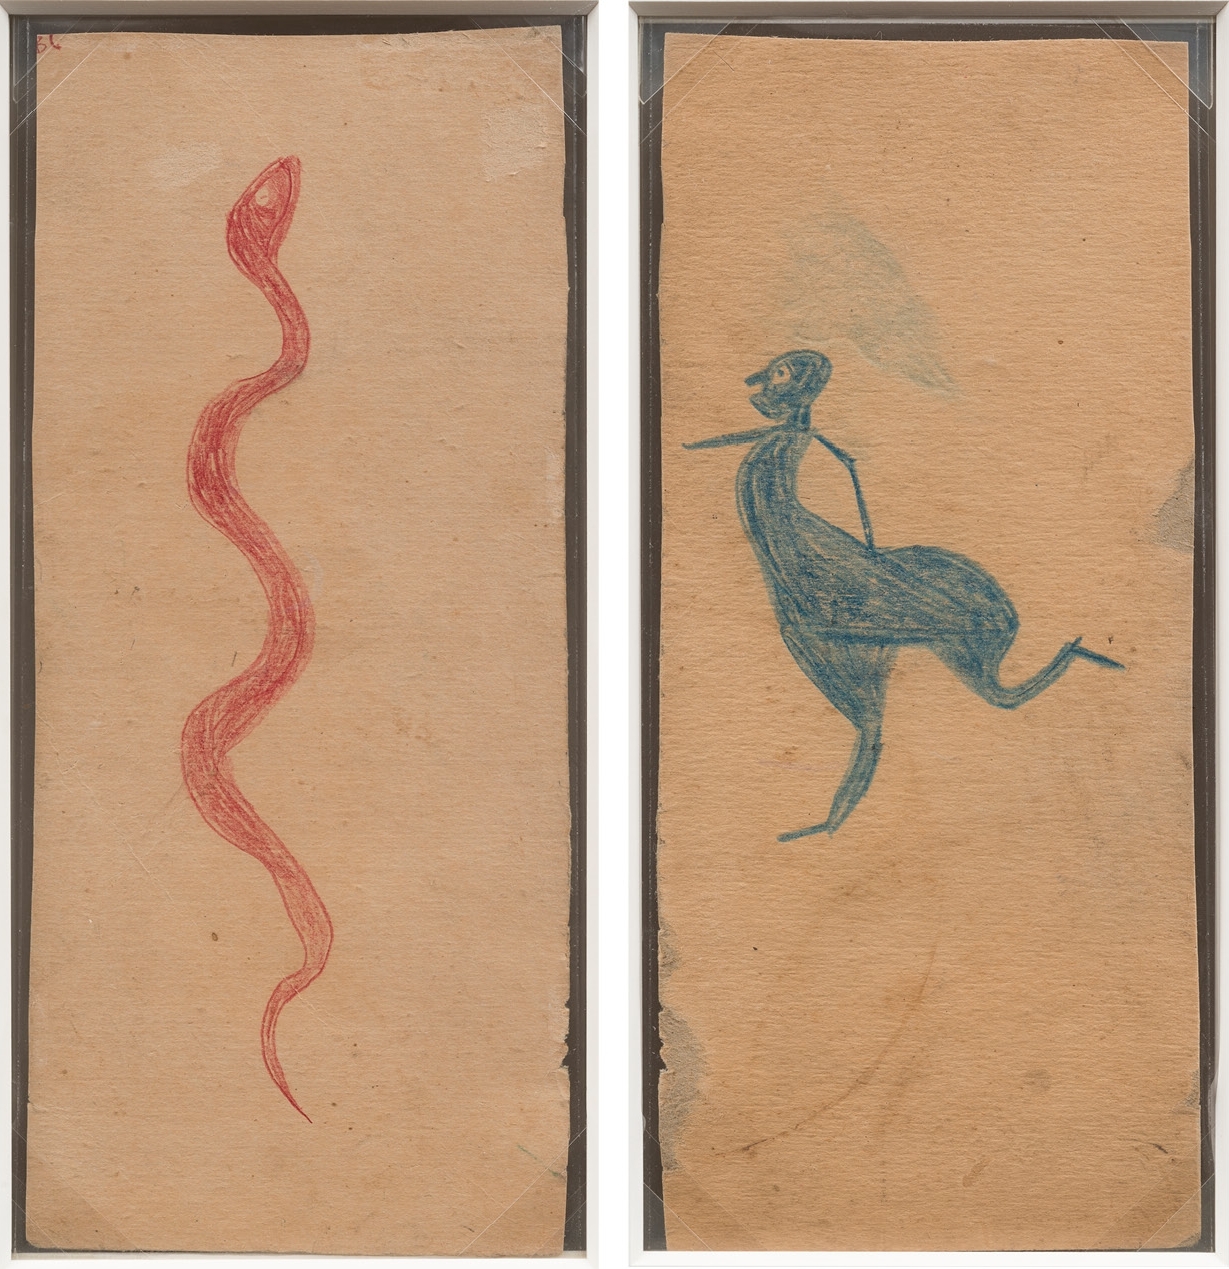 Bill Traylor,&amp;nbsp;Red Snake/Blue Man, 1939&amp;ndash;42;&amp;nbsp;colored pencil on cardboard,&amp;nbsp;10 3/4h x 4 3/4w in/&amp;nbsp;27.31h x 12.07w cm

Inquire